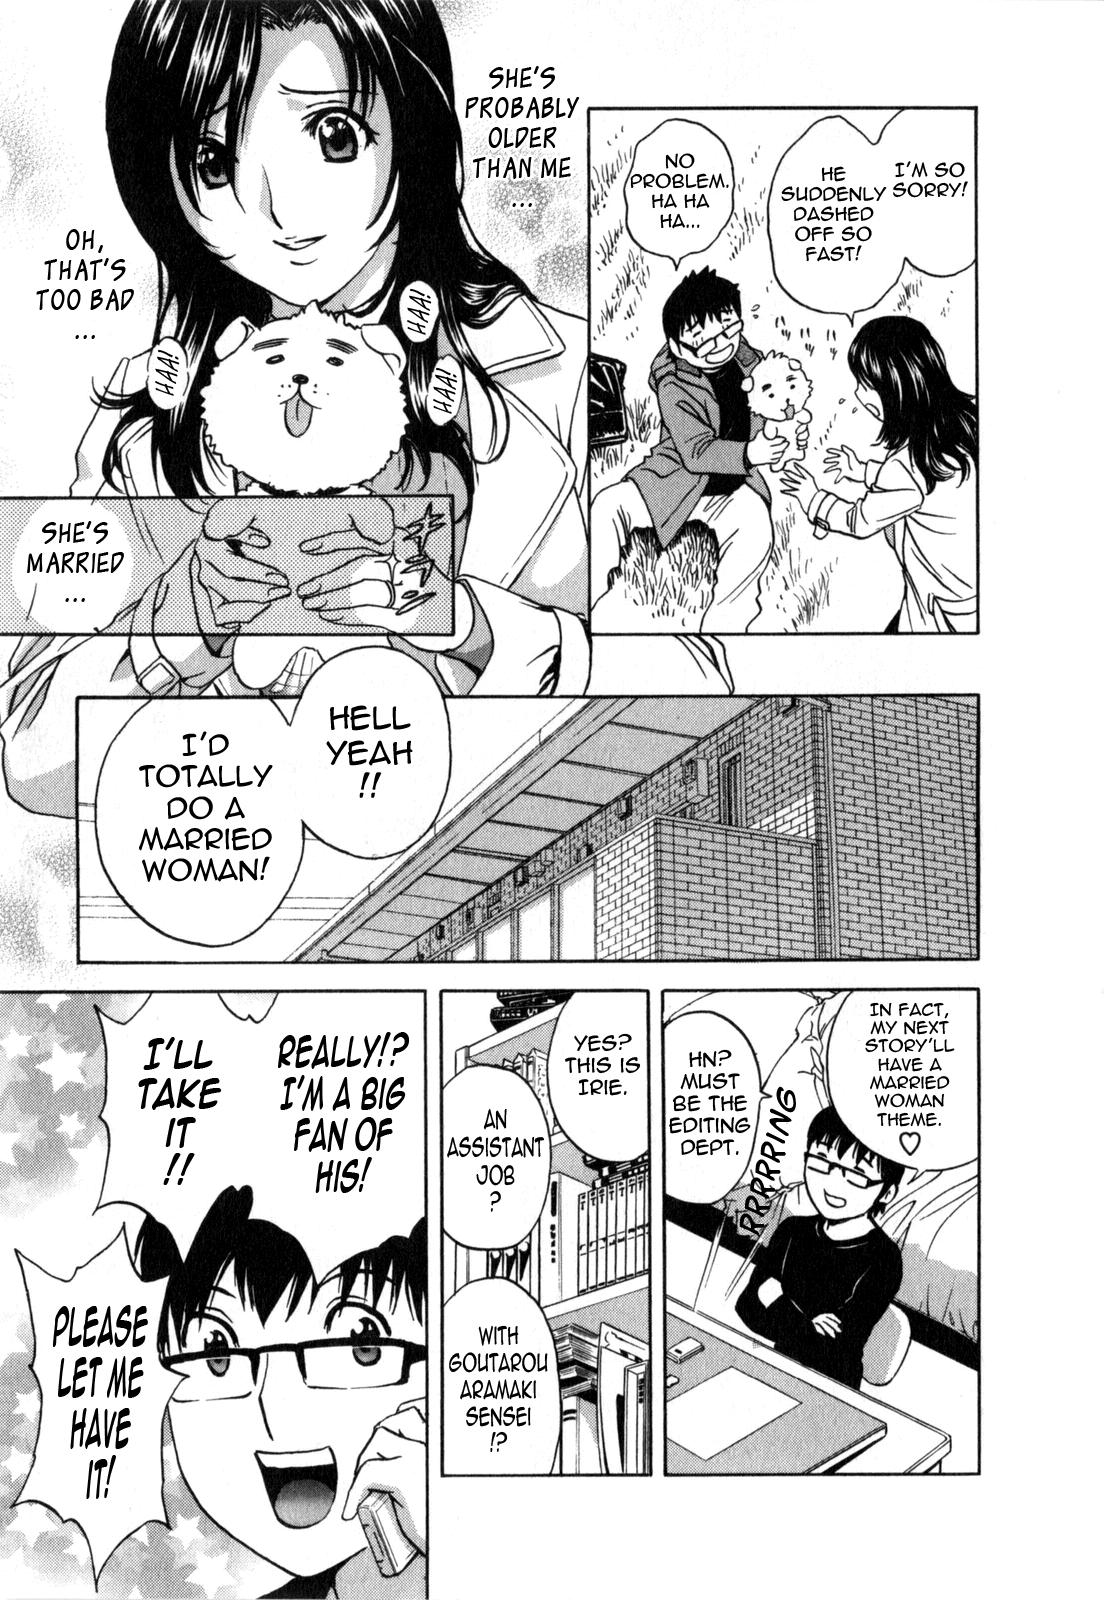 [Hidemaru] Life with Married Women Just Like a Manga 1 - Ch. 1-5 [English] {Tadanohito} 11